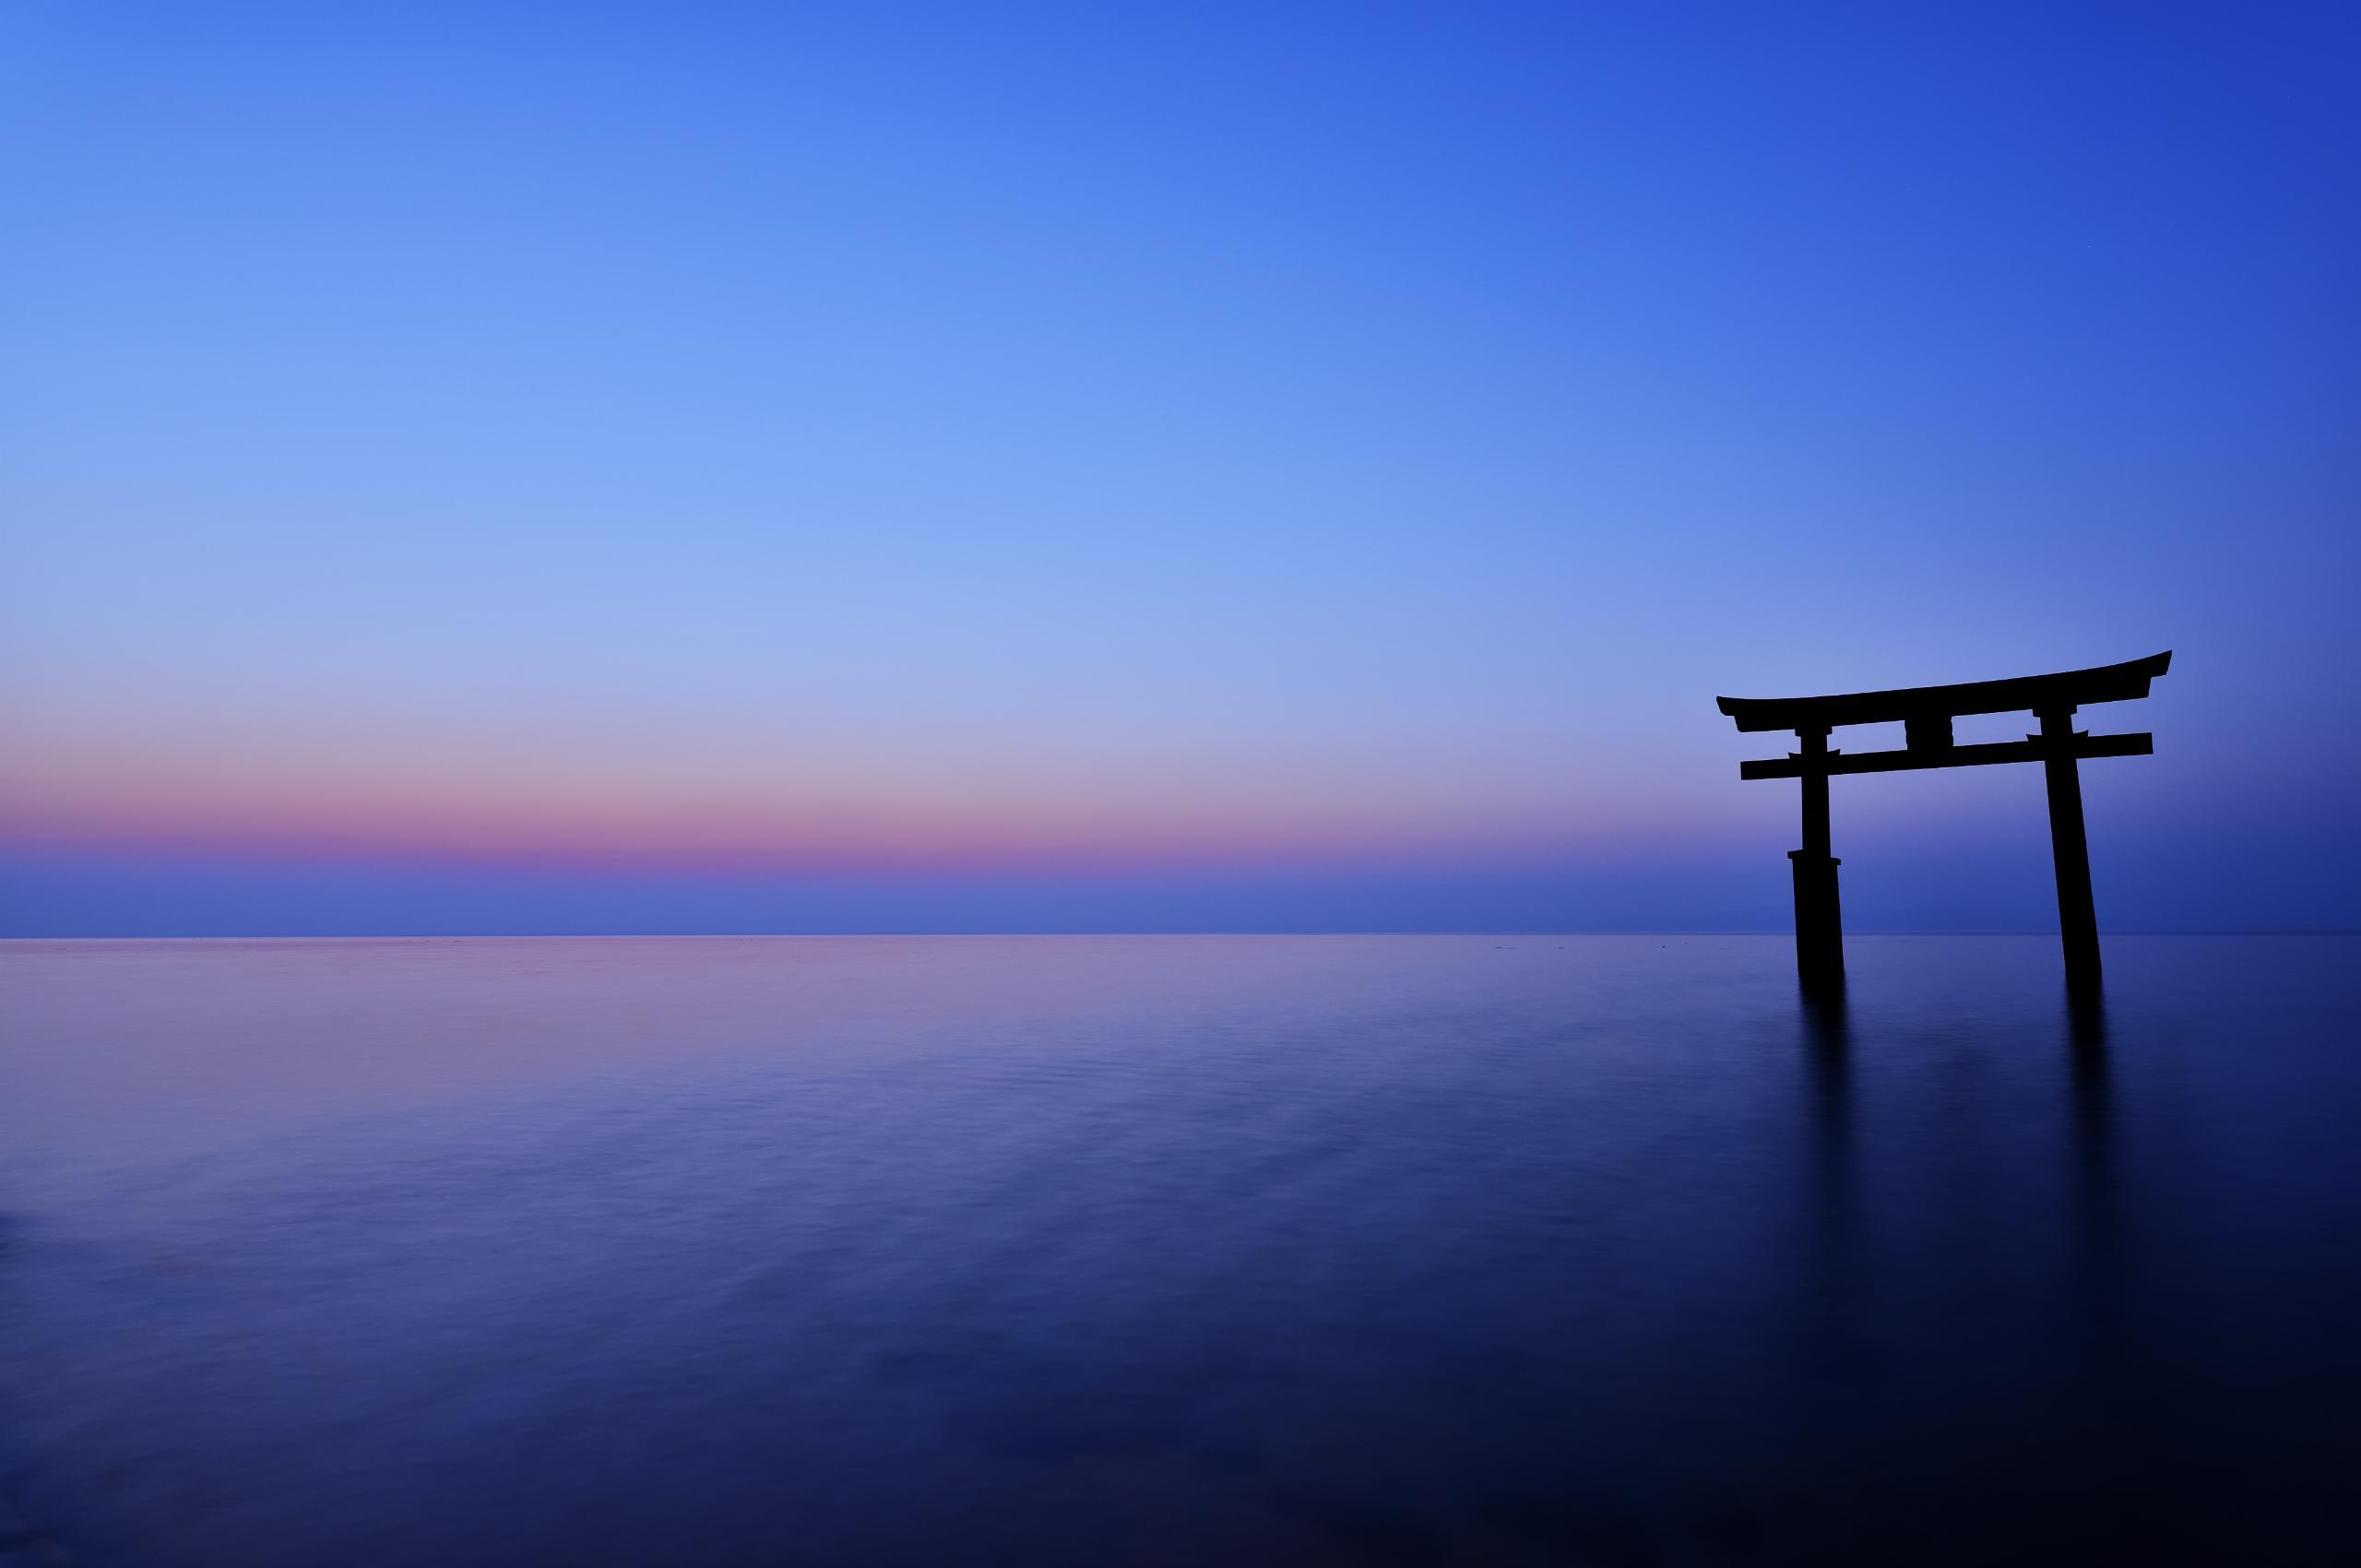 Japan the arch night sunset horizon sea ocean calm sky blue